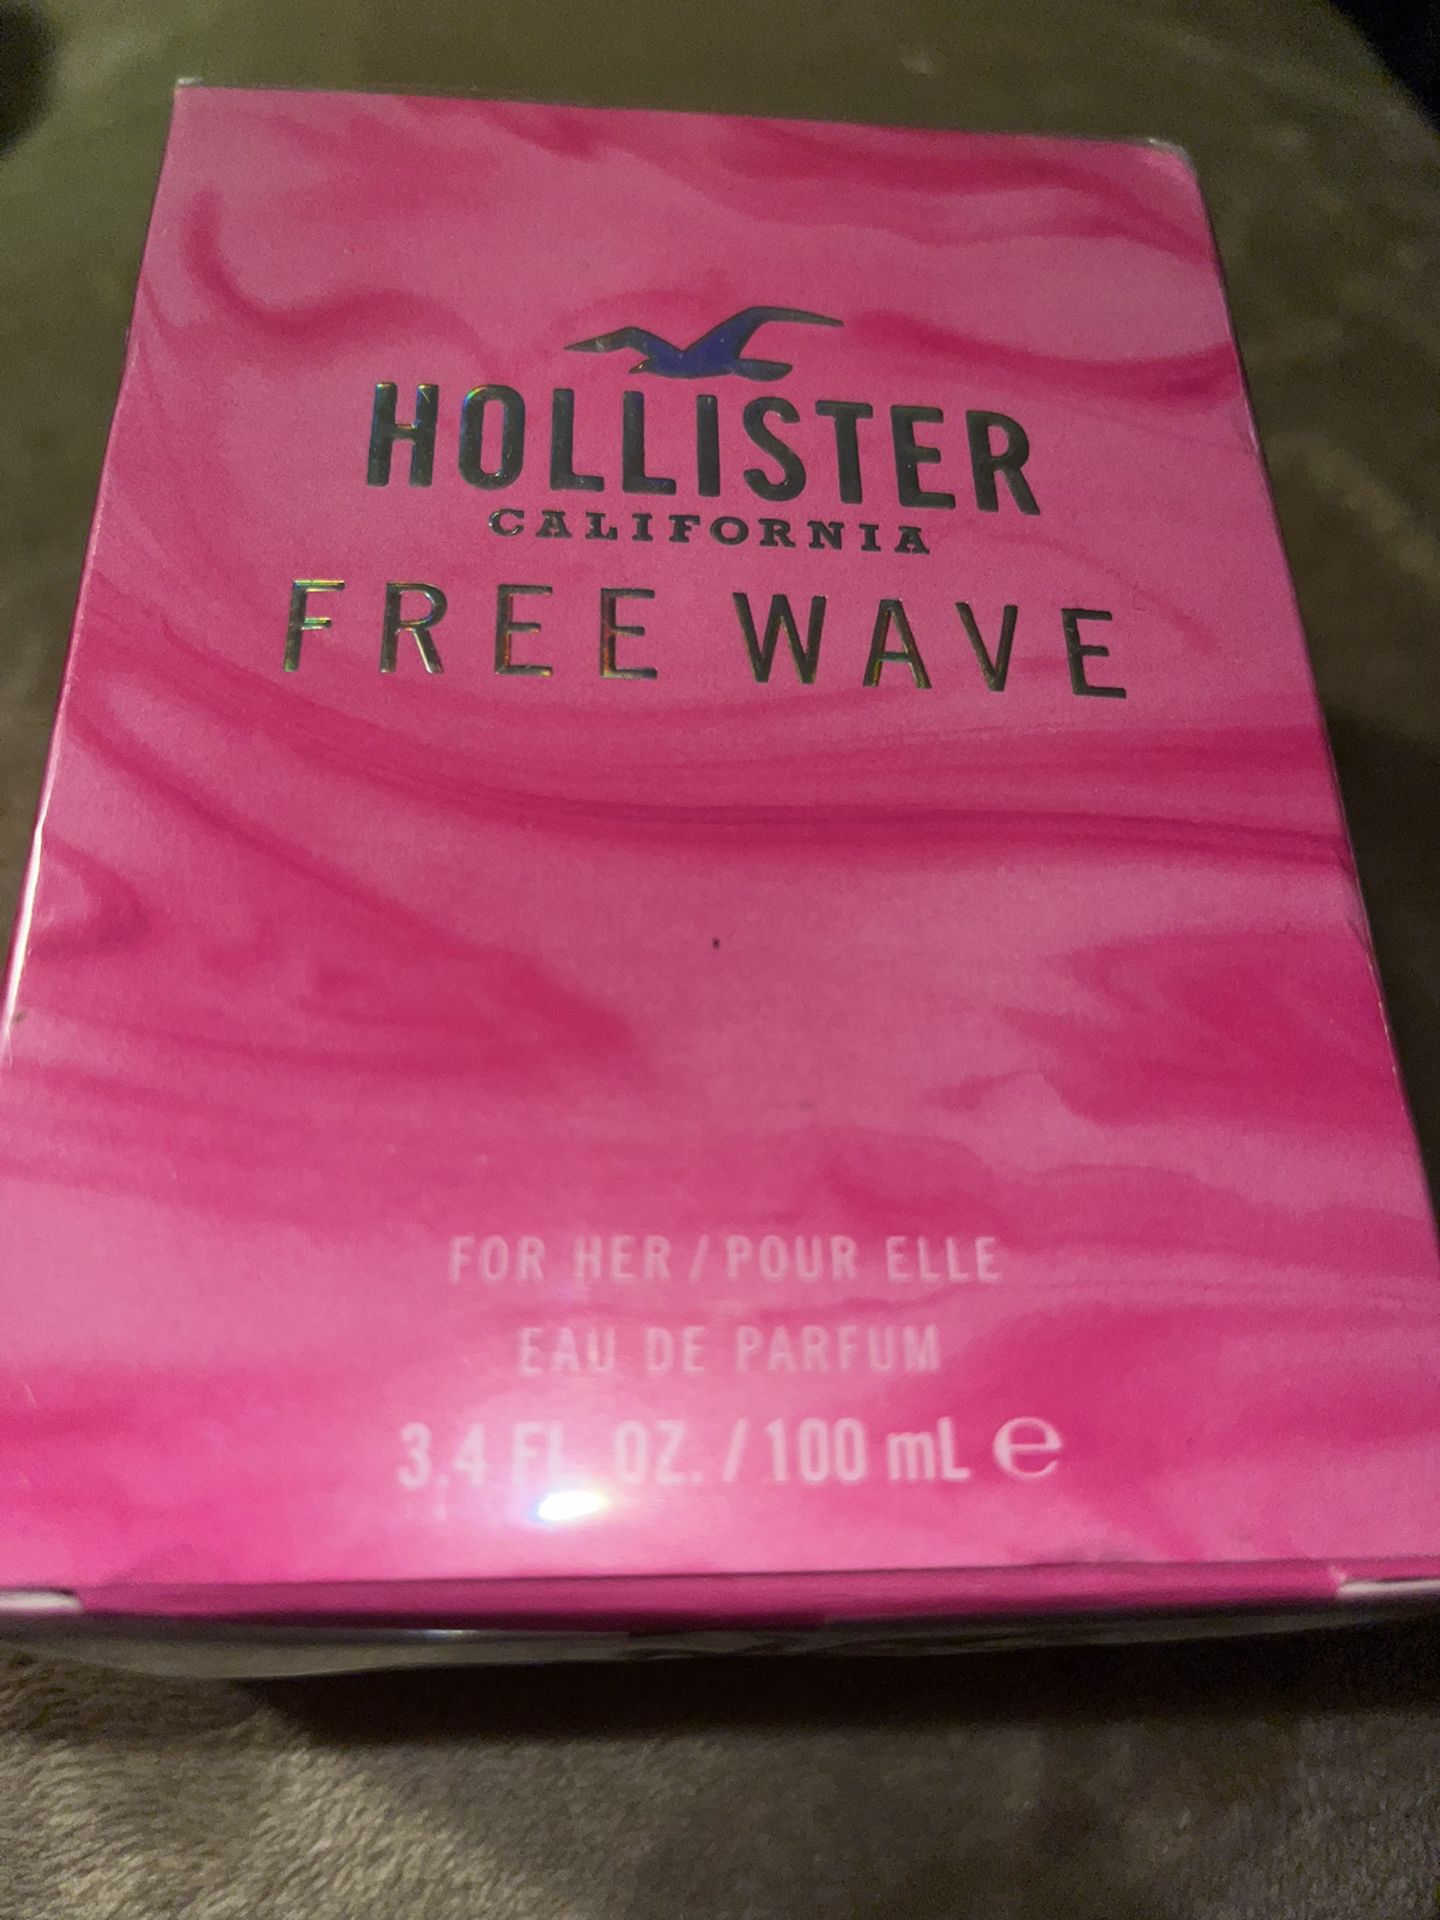 Hollister California free wave perfume 3.4 fluid ounces new sealed inbox